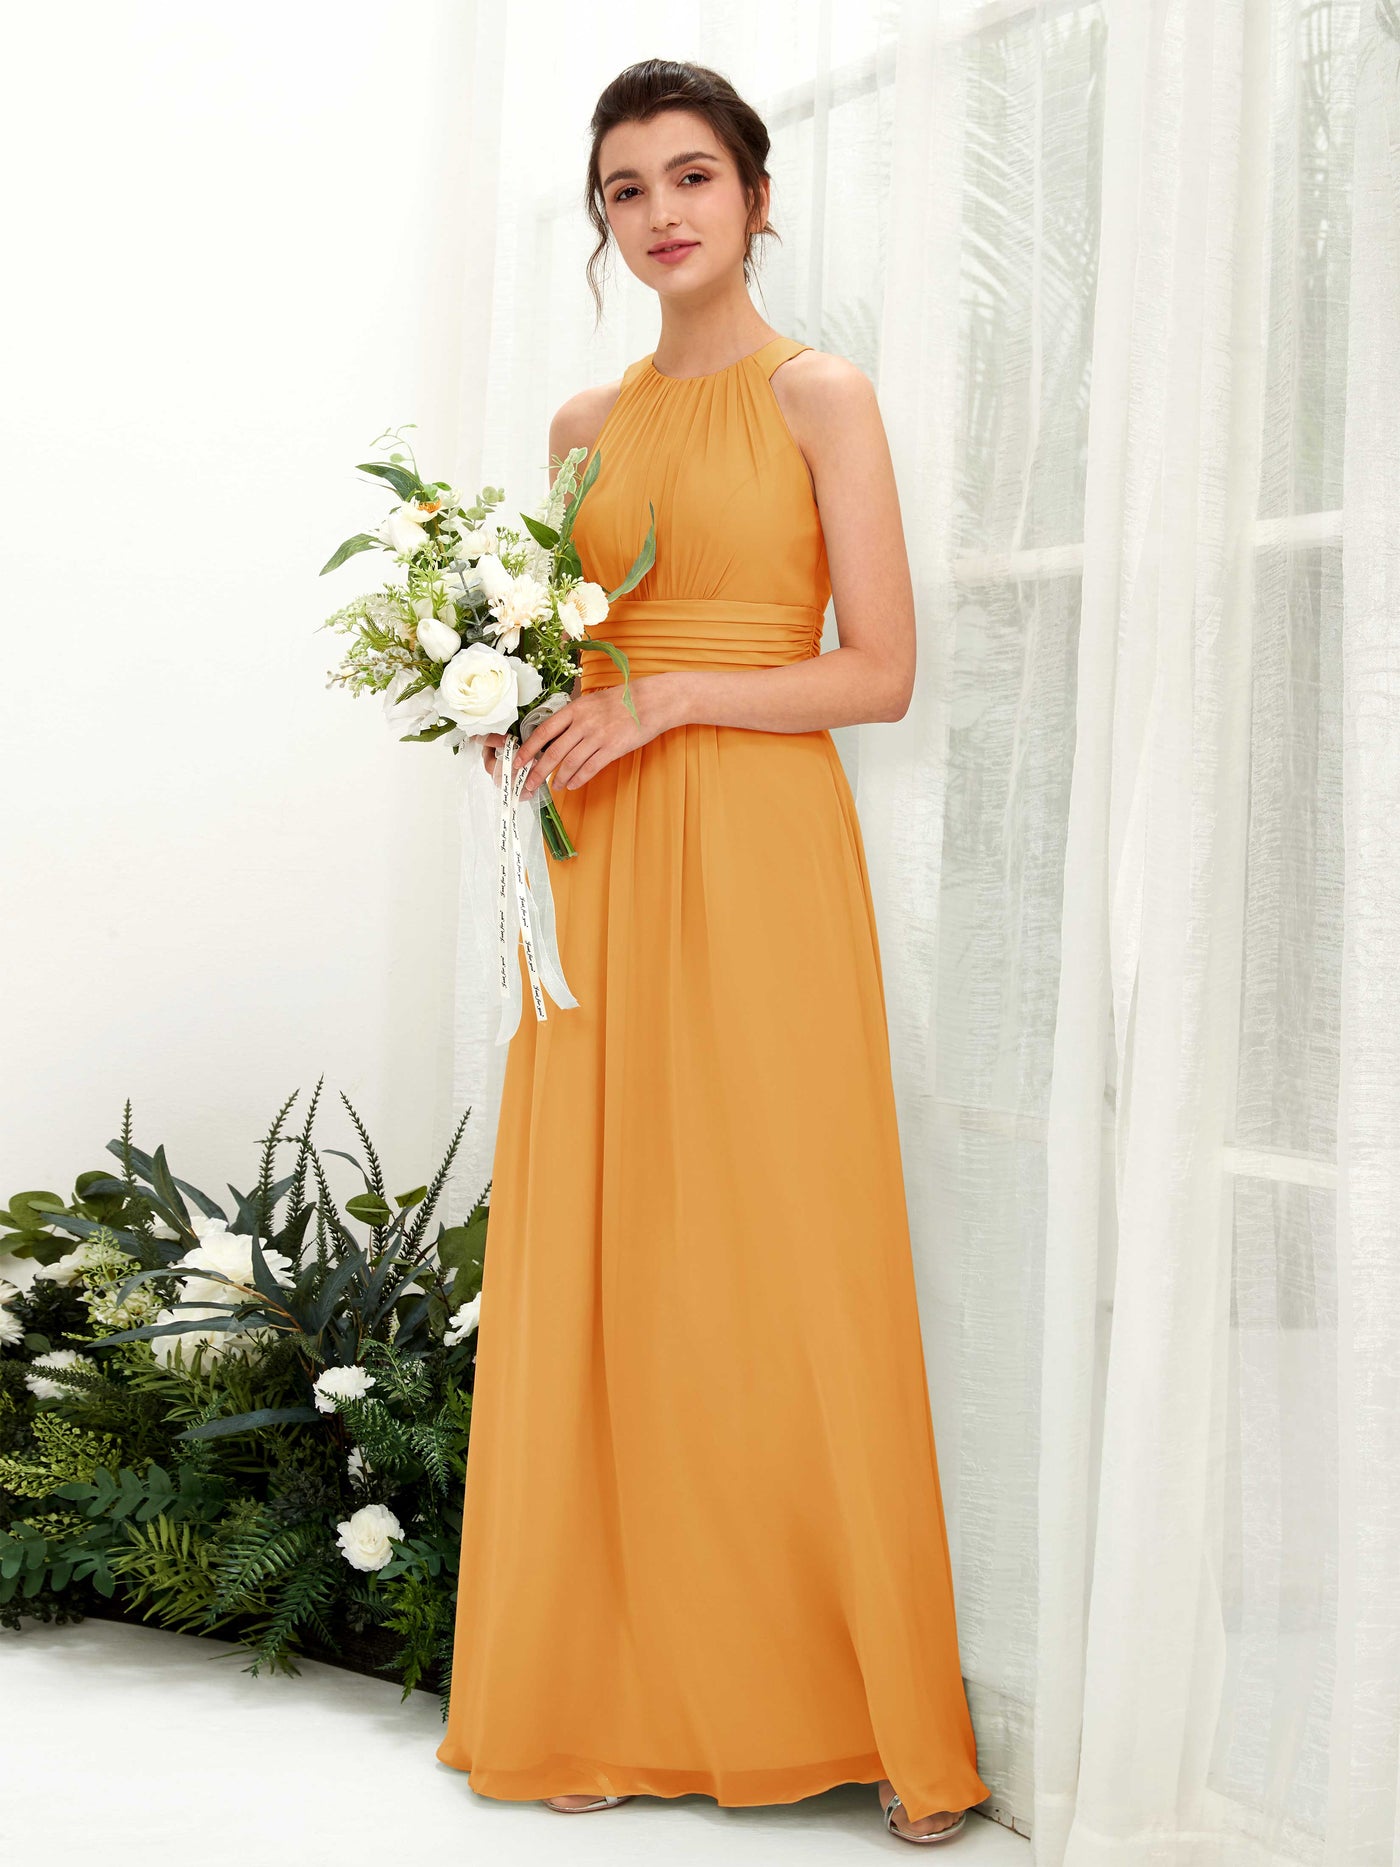 Mango Bridesmaid Dresses Bridesmaid Dress A-line Chiffon Halter Full Length Sleeveless Wedding Party Dress (81221502)#color_mango